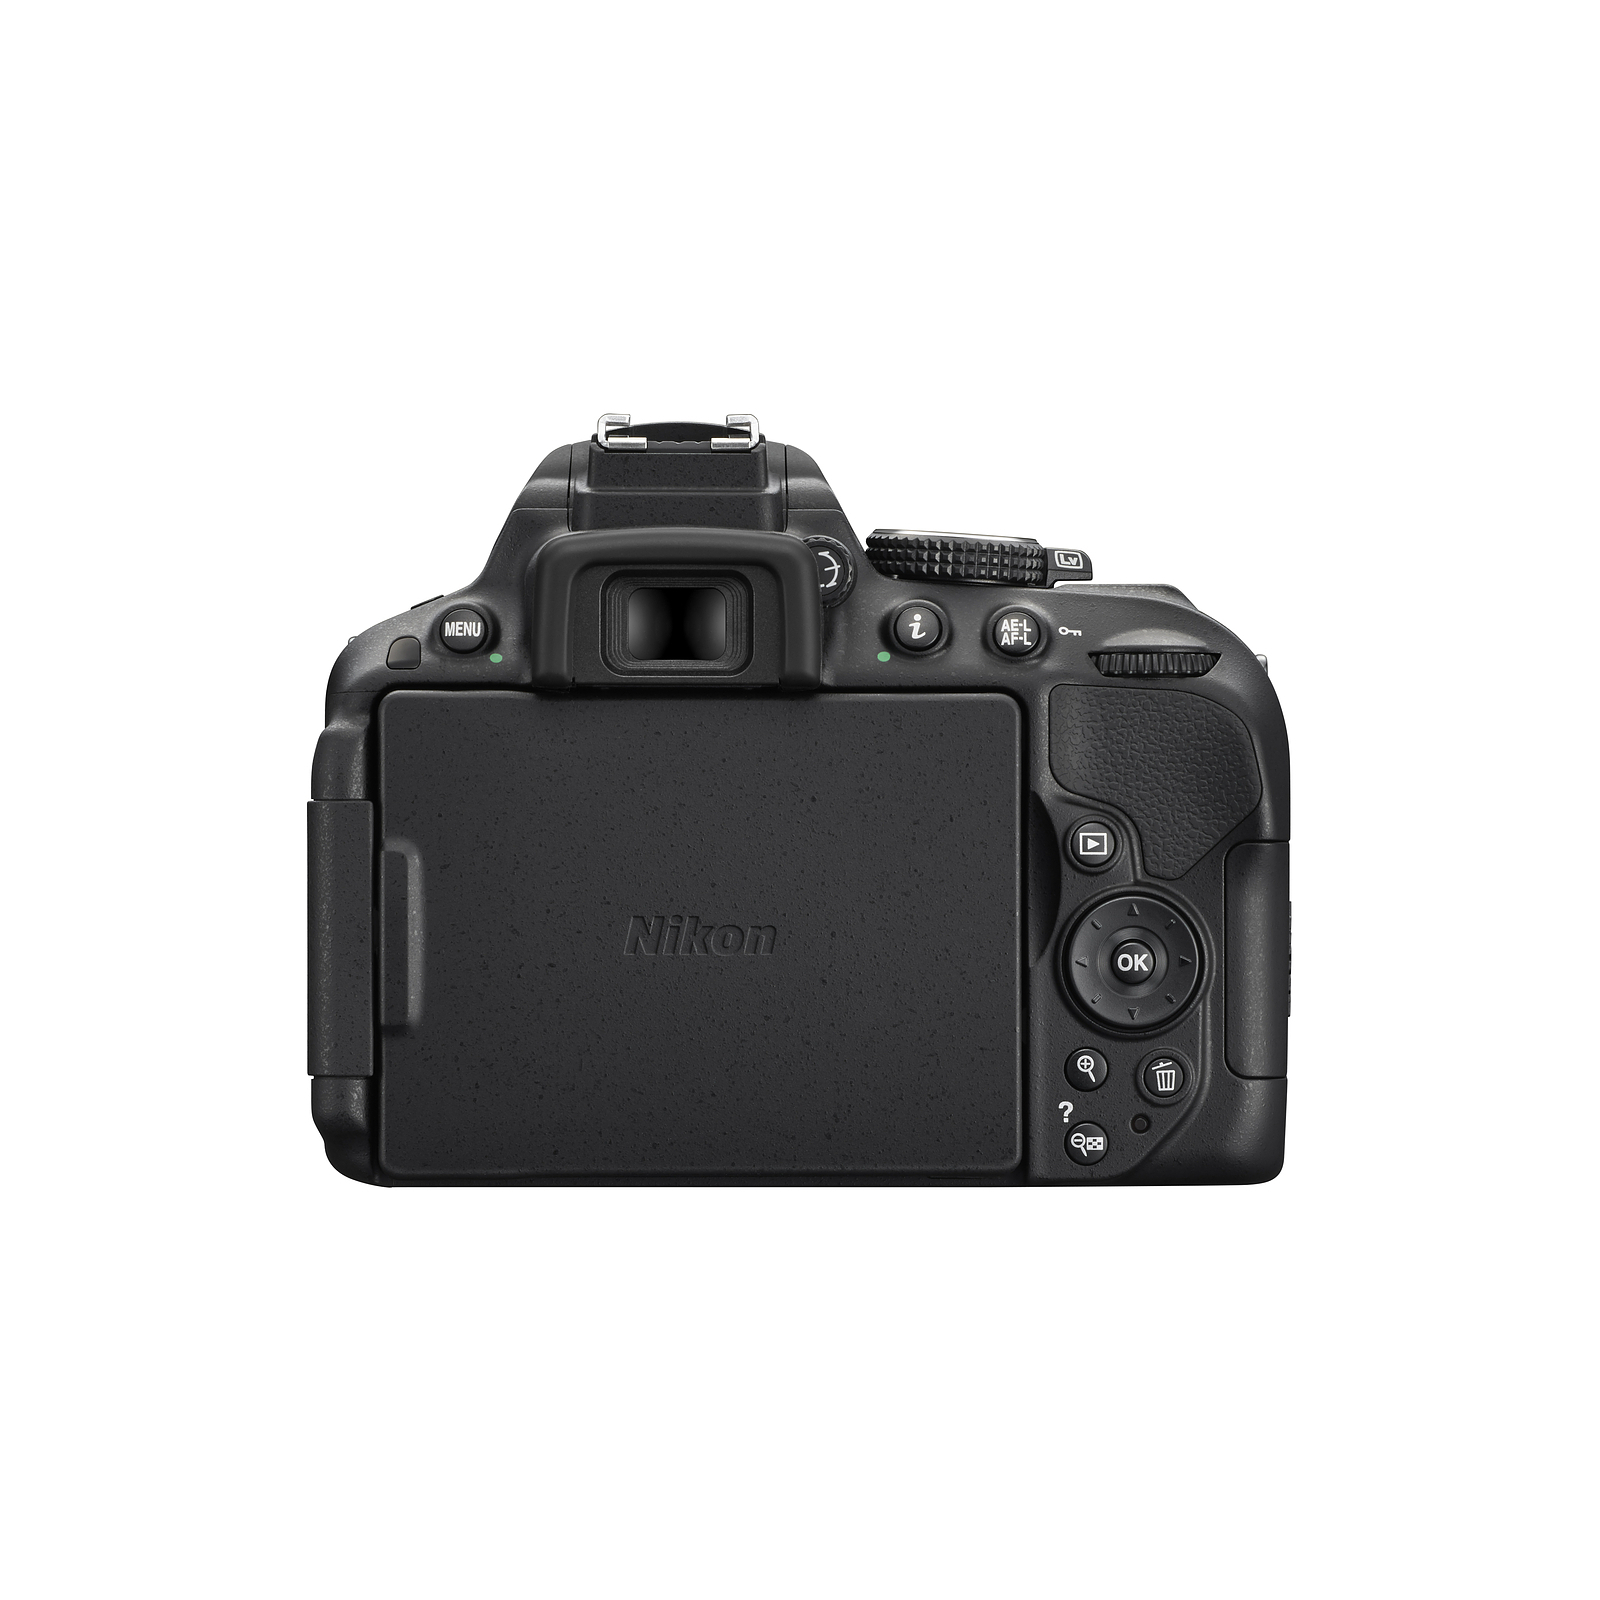 Цифровой фотоаппарат Nikon D5300 body (VBA370AE) изображение 5